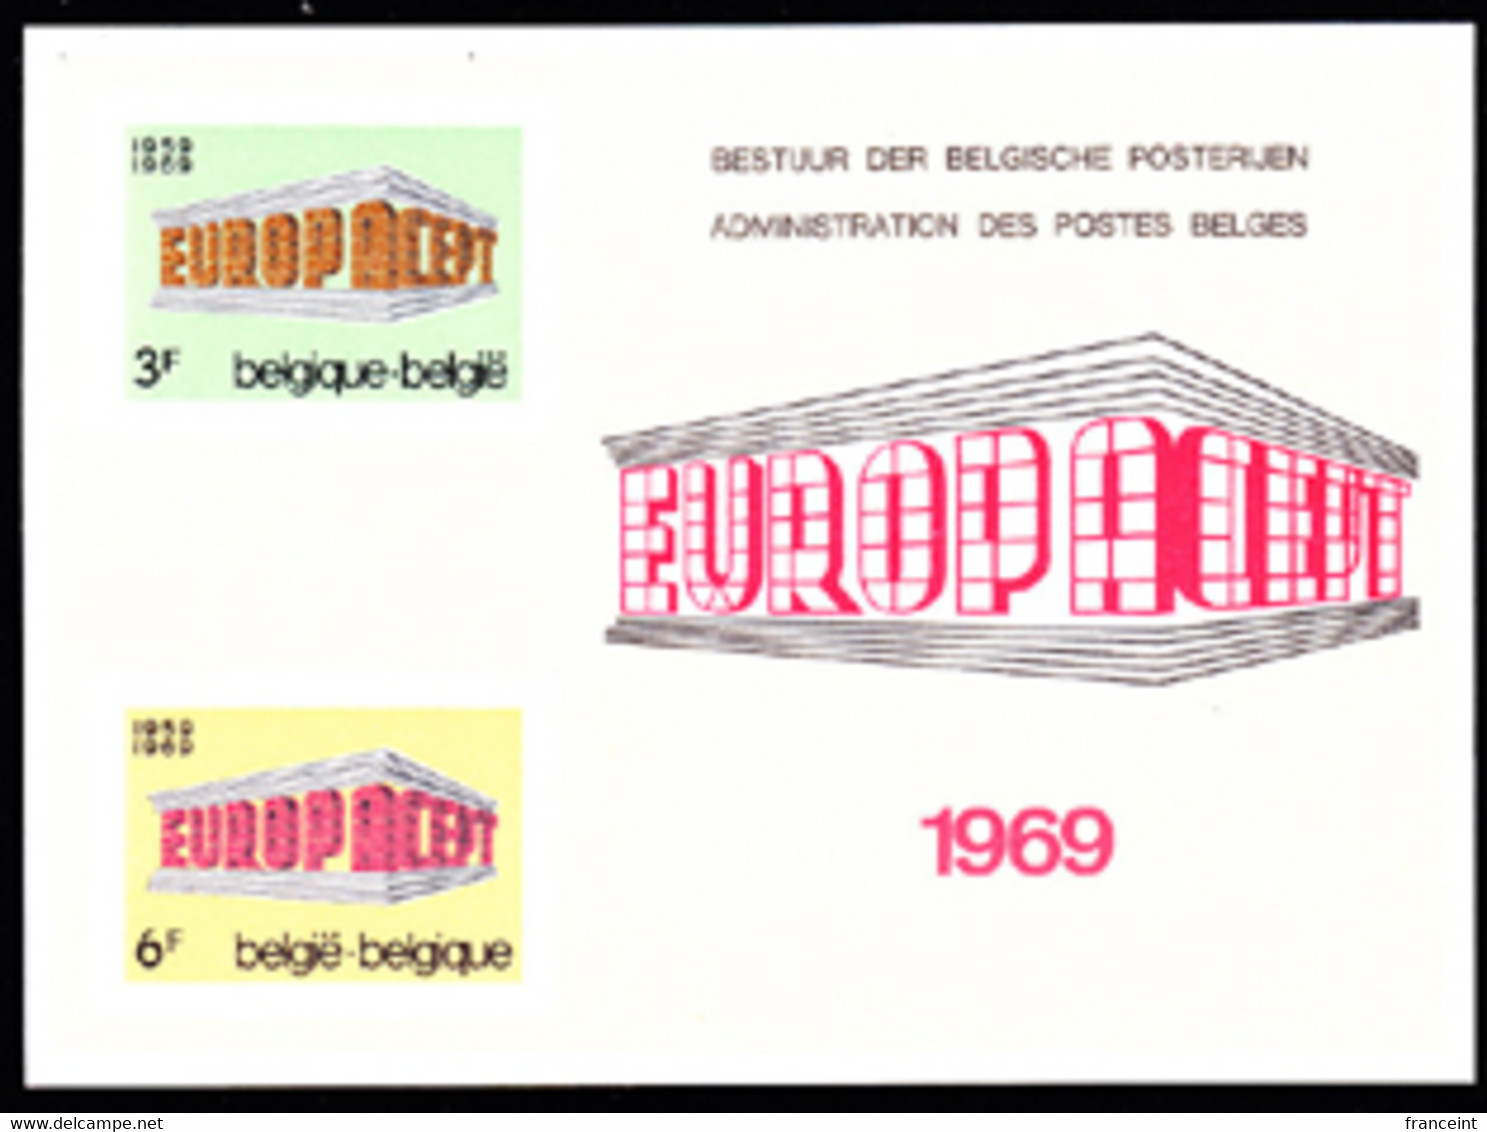 BELGIUM(1969) Stylised Buildings. Scott Nos 718-9. Yvert Nos 1489-90. Europa Issue. Deluxe Proof (LX54). - Luxevelletjes [LX]